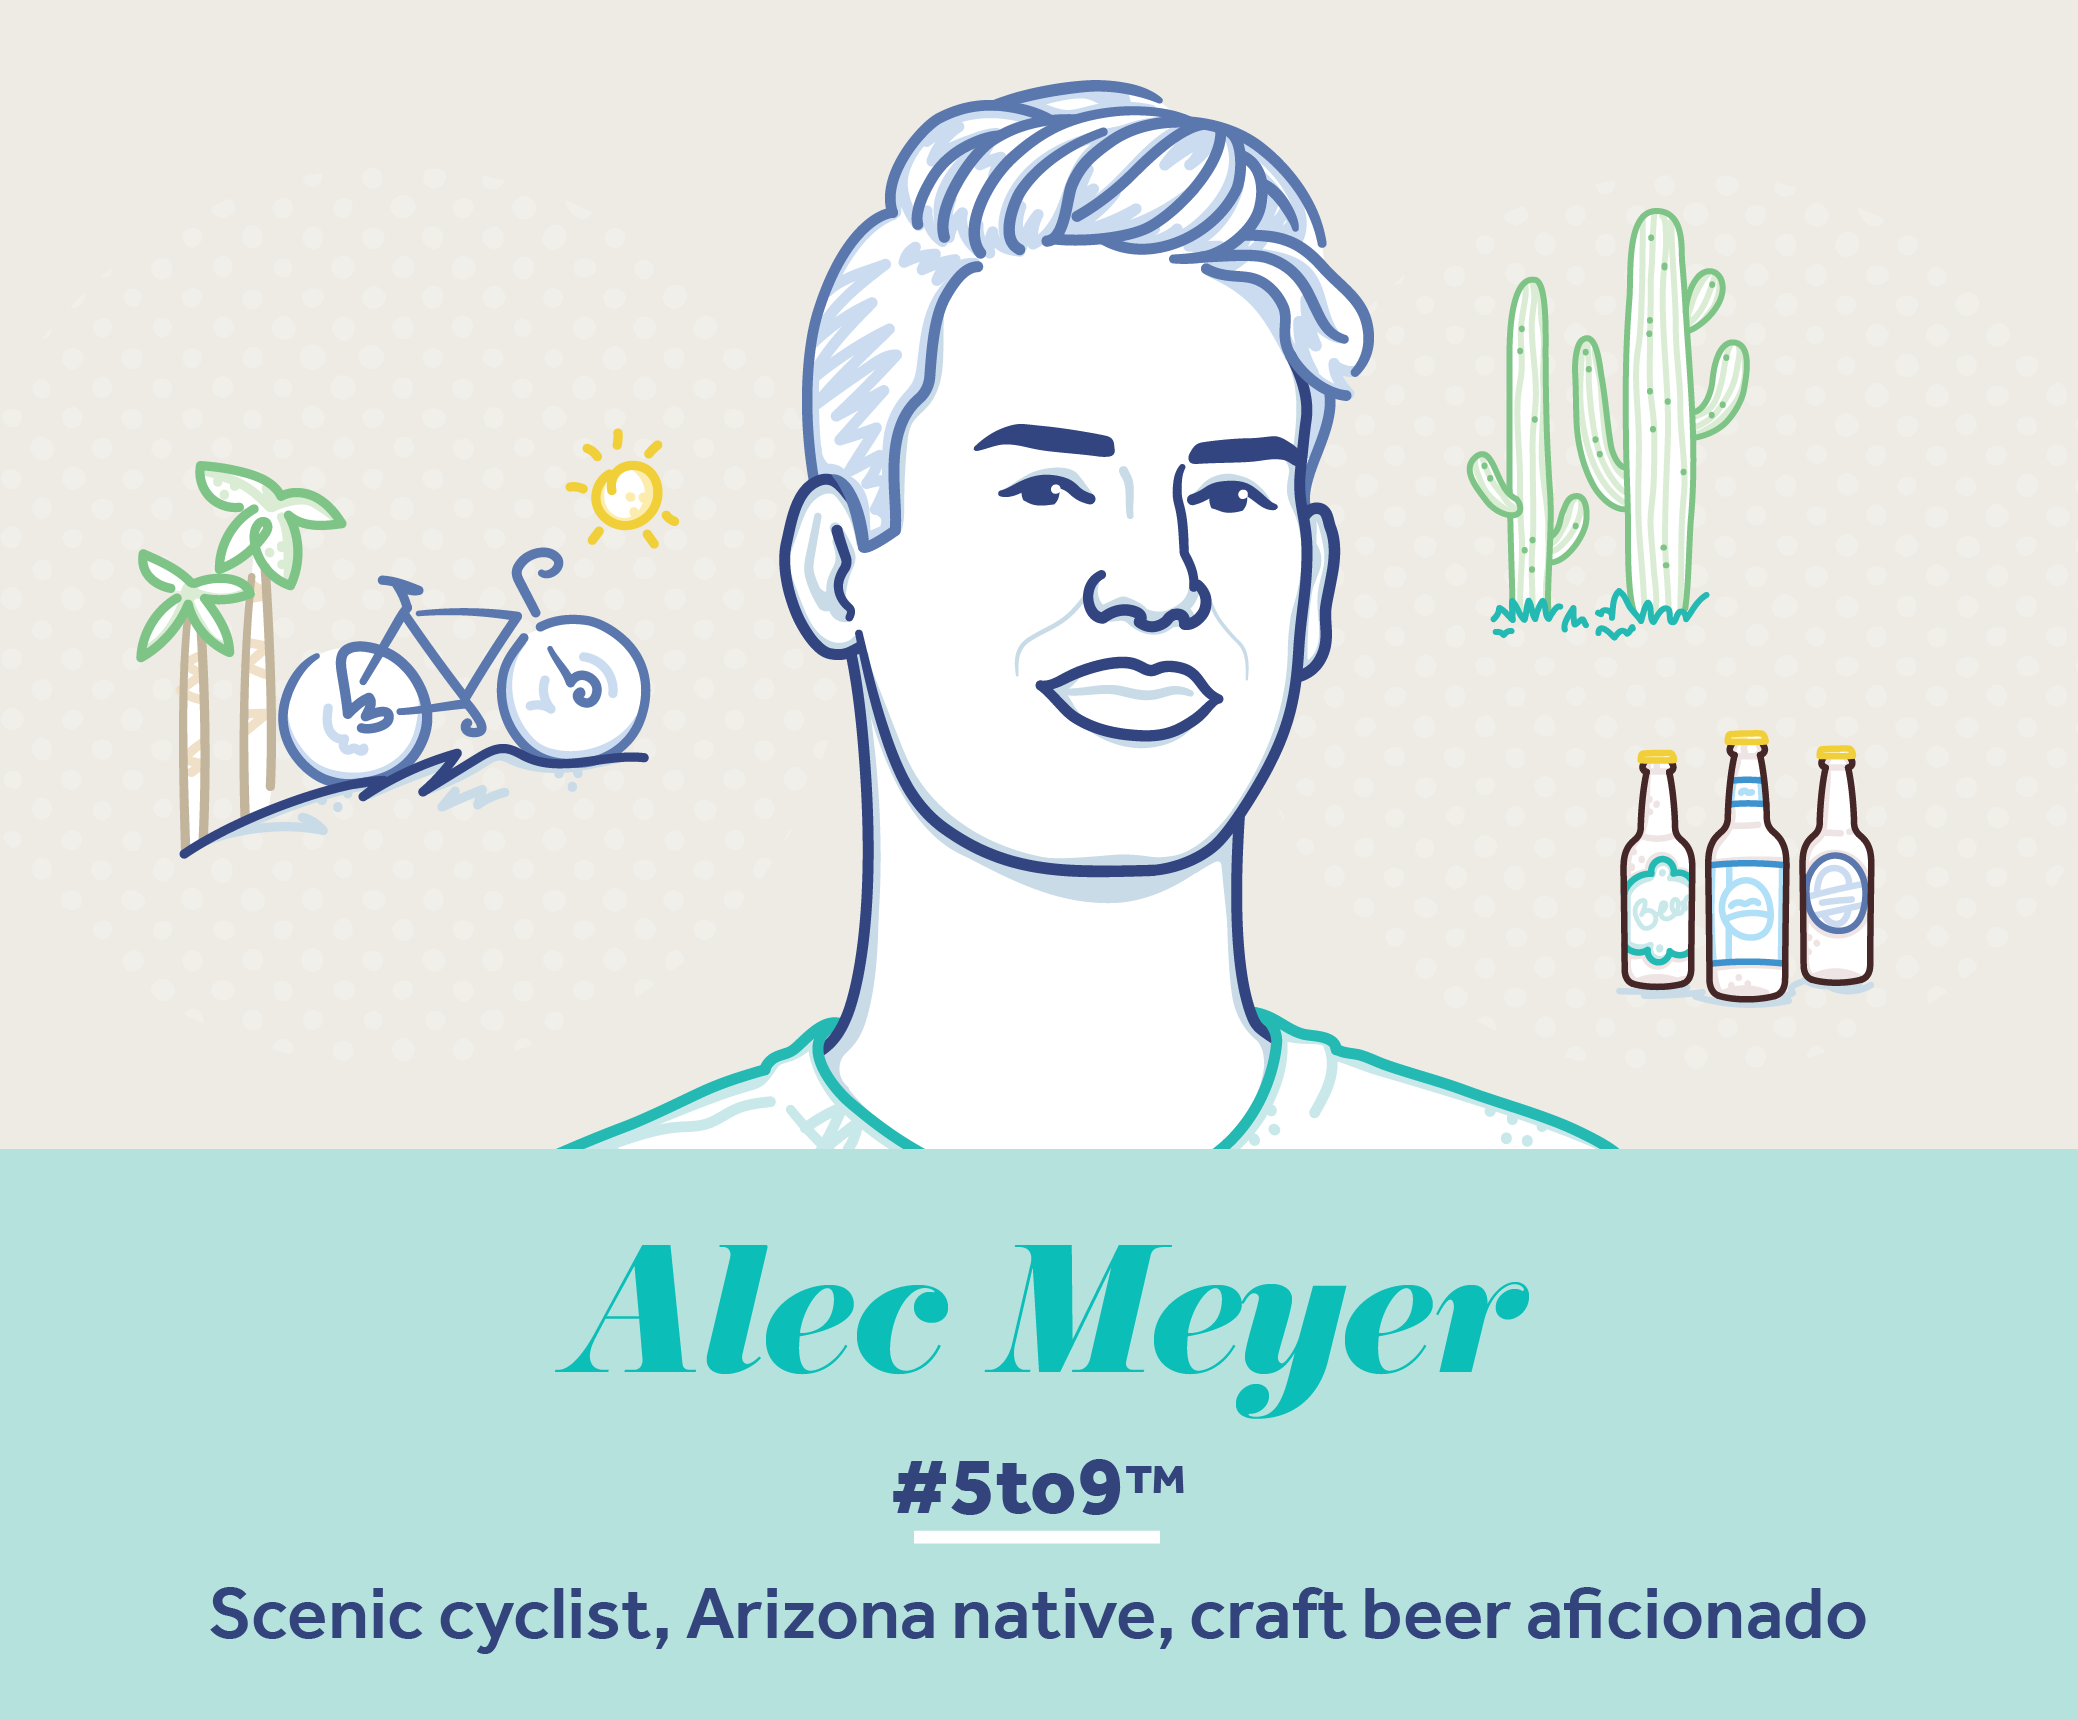 Alyce All Star Alec Meyer from Postclick